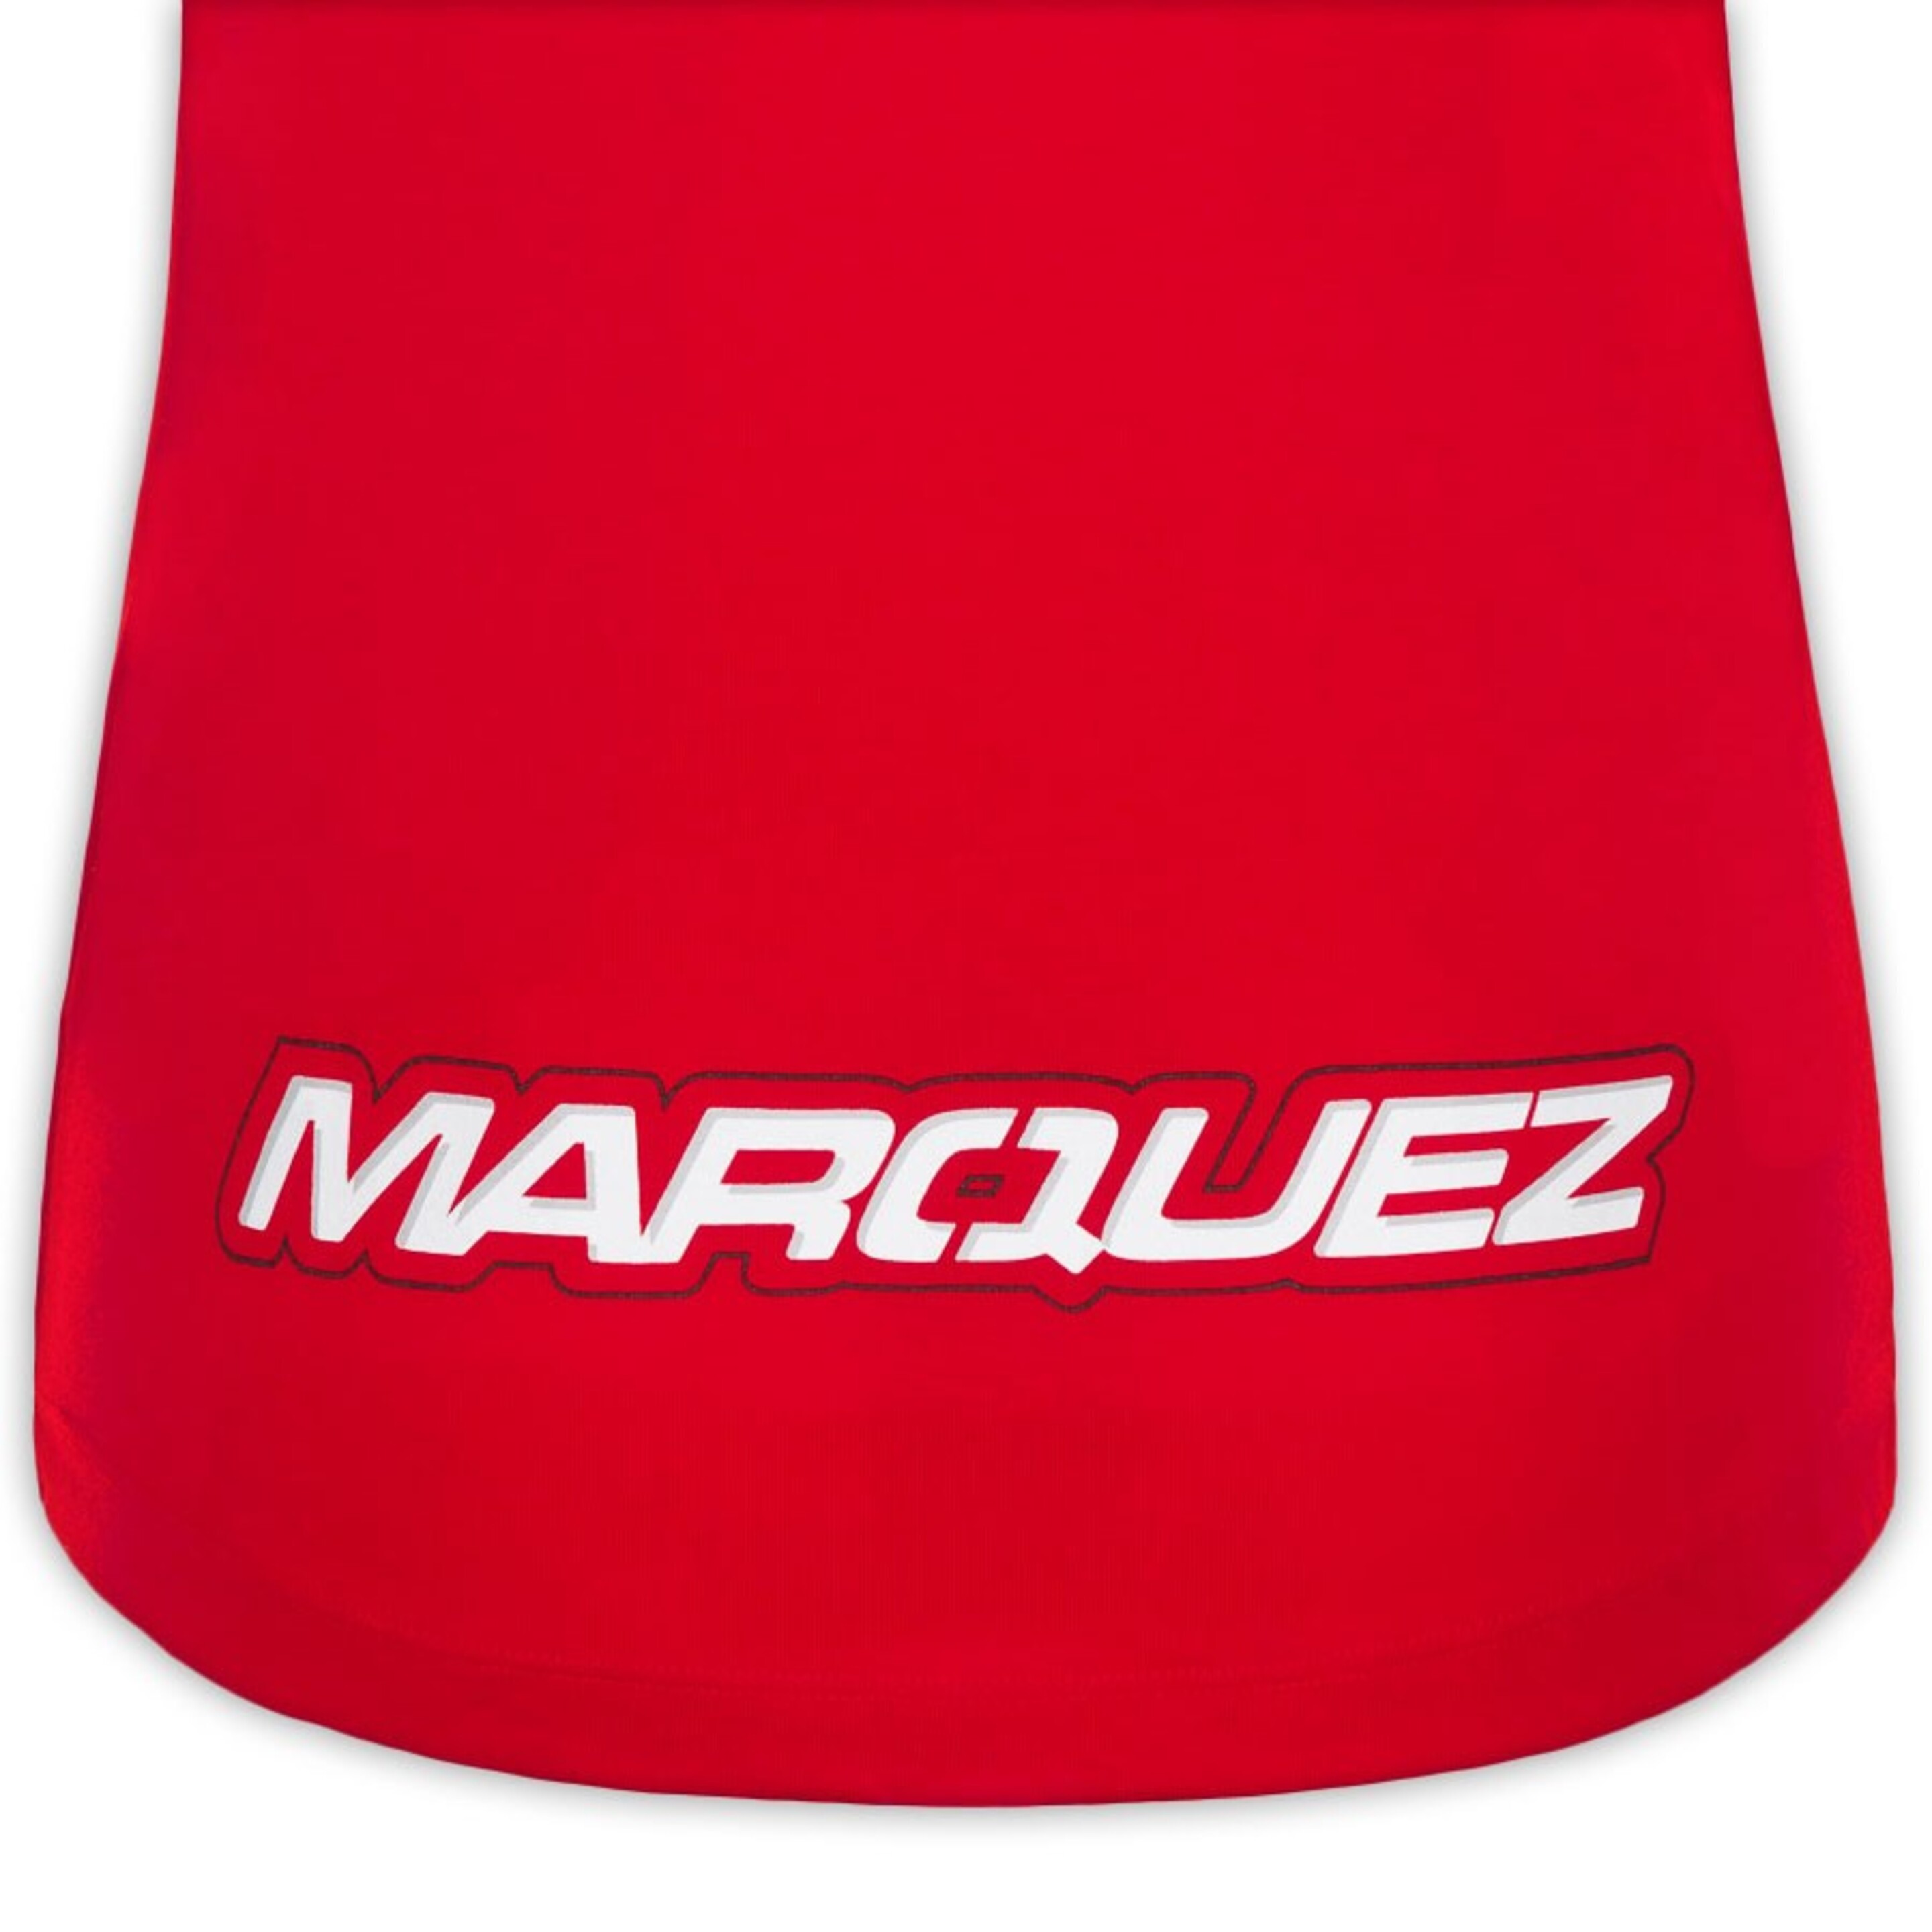 Camiseta Tirantes Mujer Marc Márquez 93 Hormiga